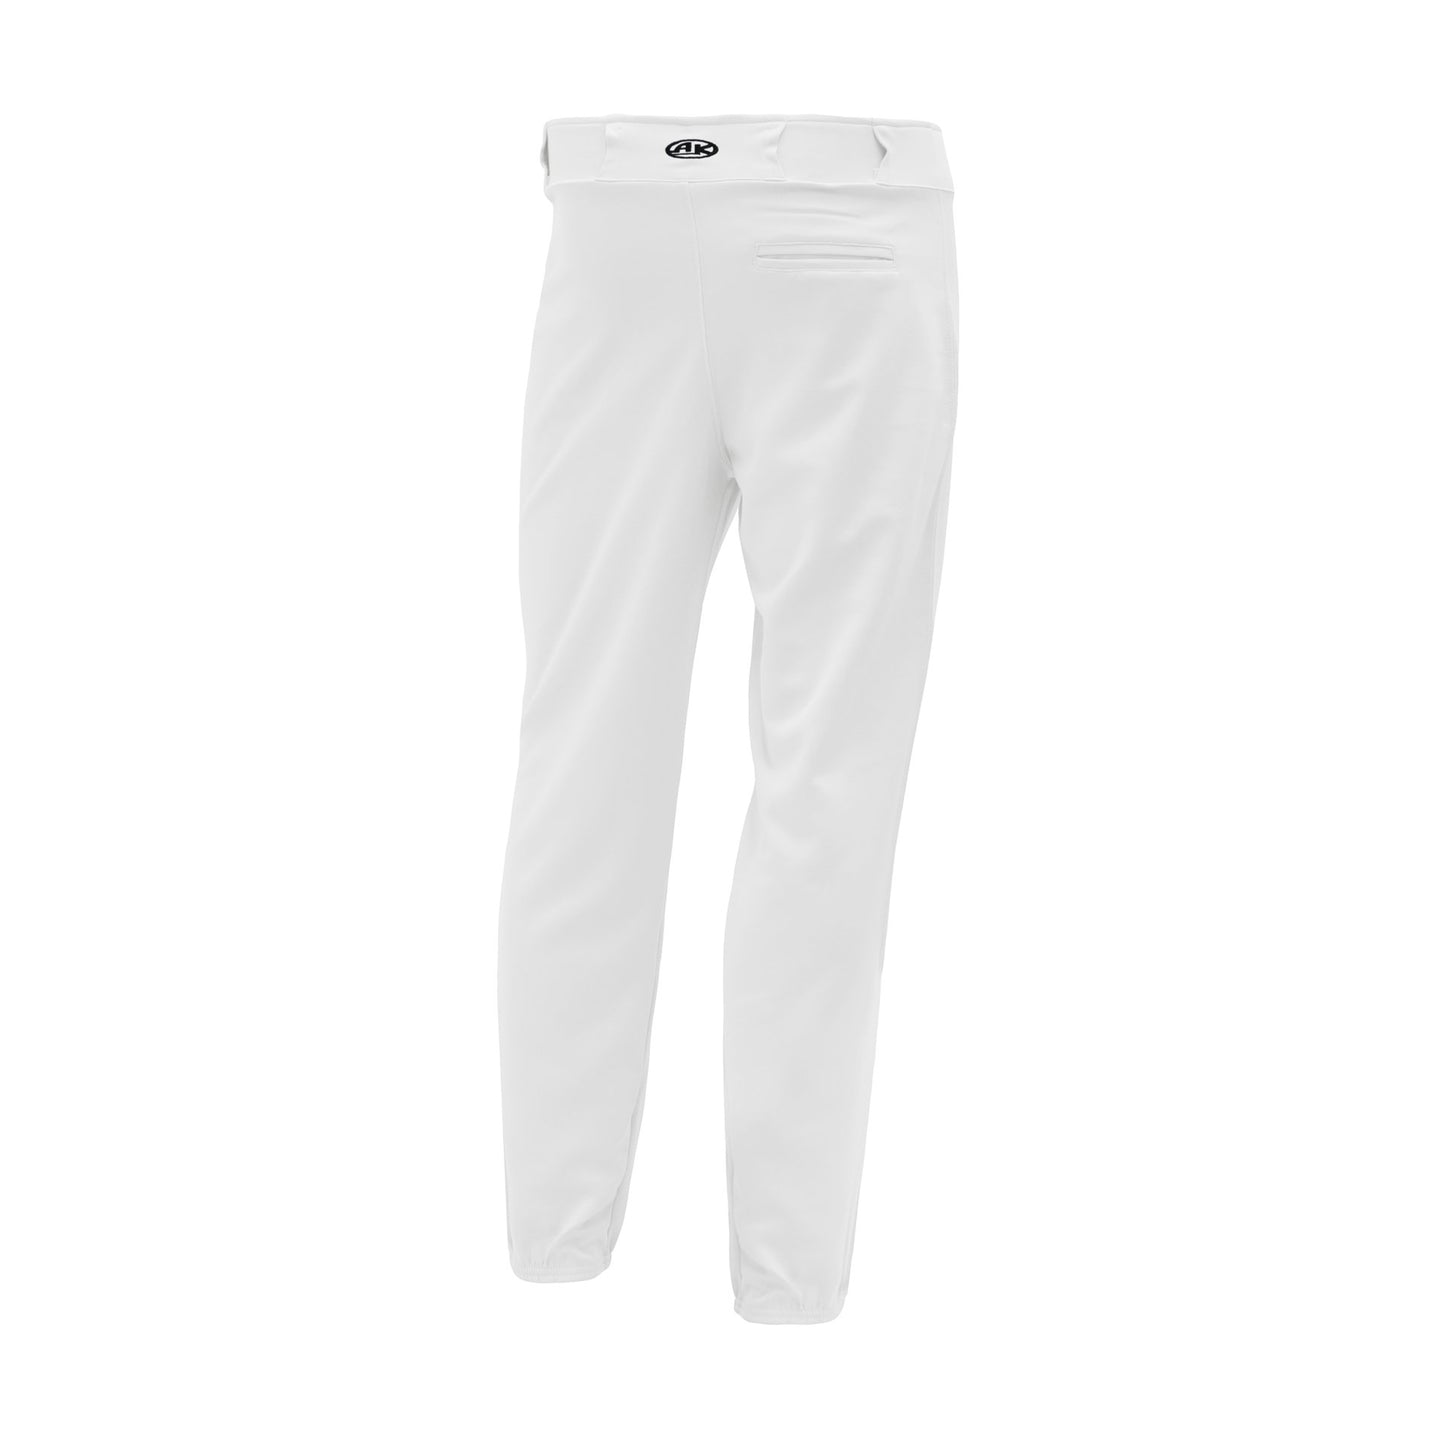 Premium Baseball Pants, Elastic Bottom, White, ba1380-000, back